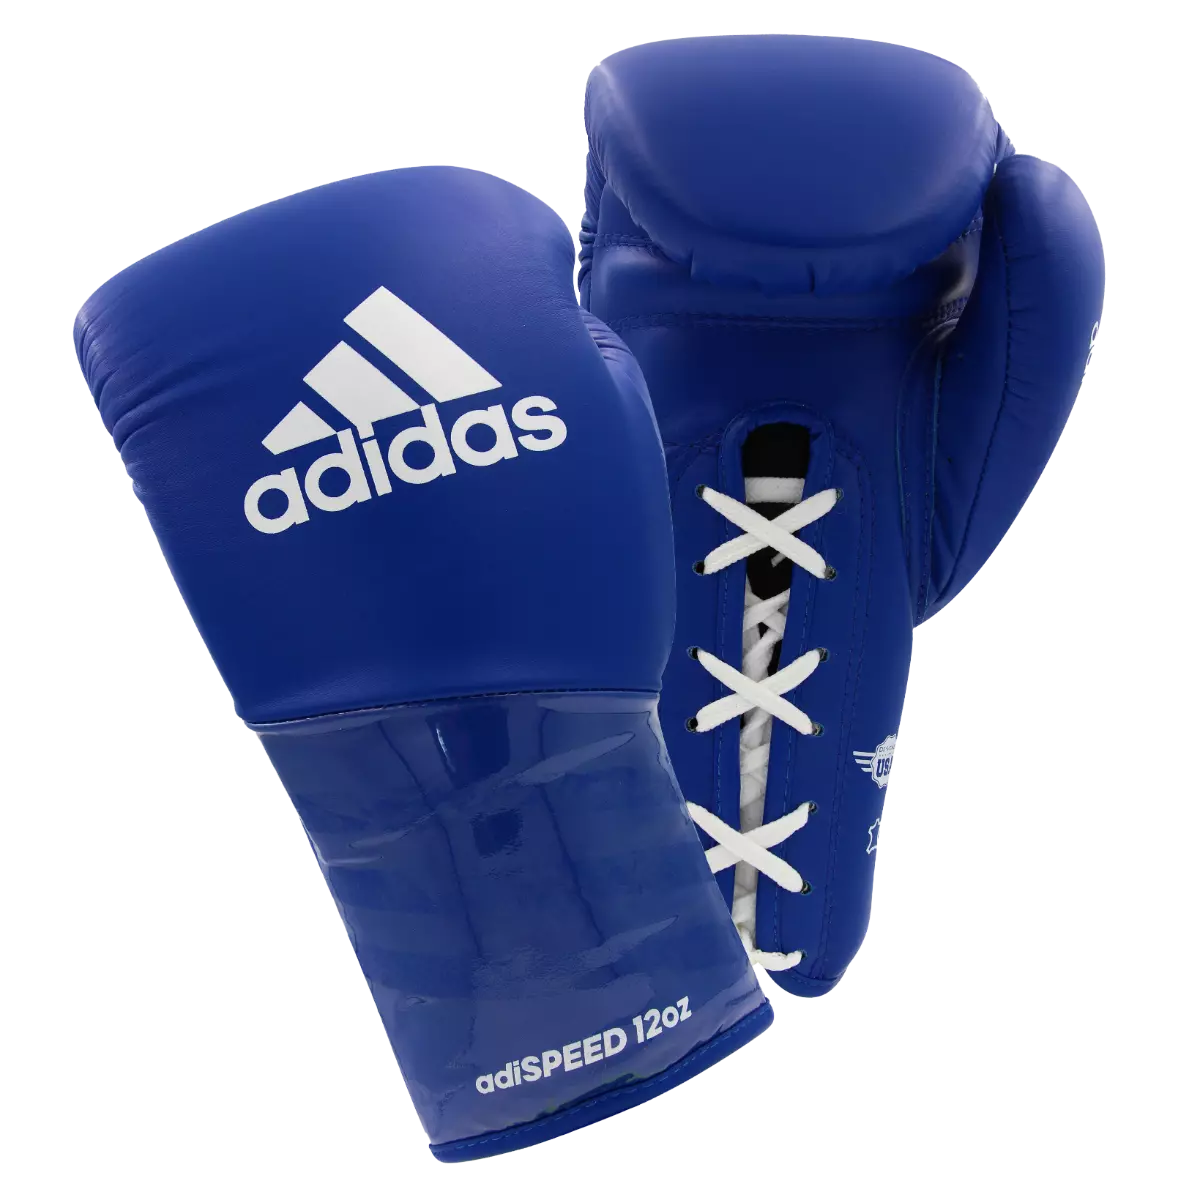 adidas Adispeed Pro Lace Up Boxing Gloves Leather